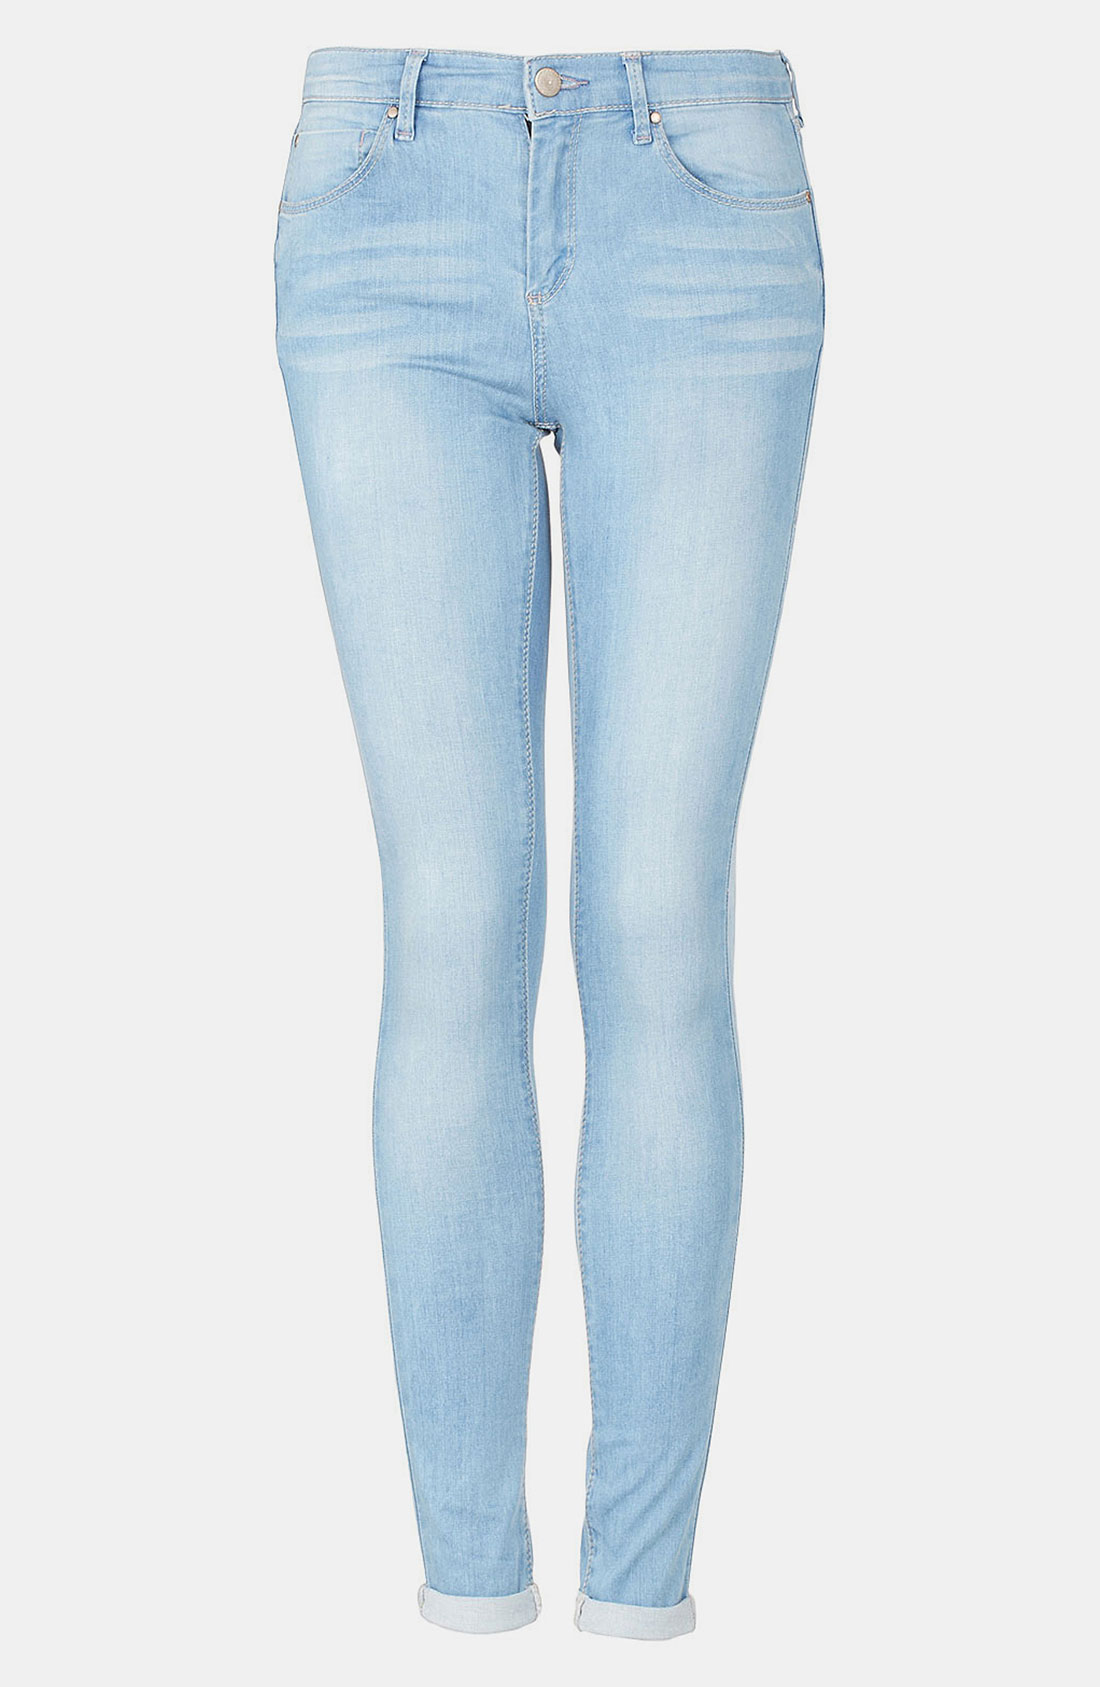 Topshop Moto Leigh Bleach Wash Skinny Jeans Long In Blue Light Denim